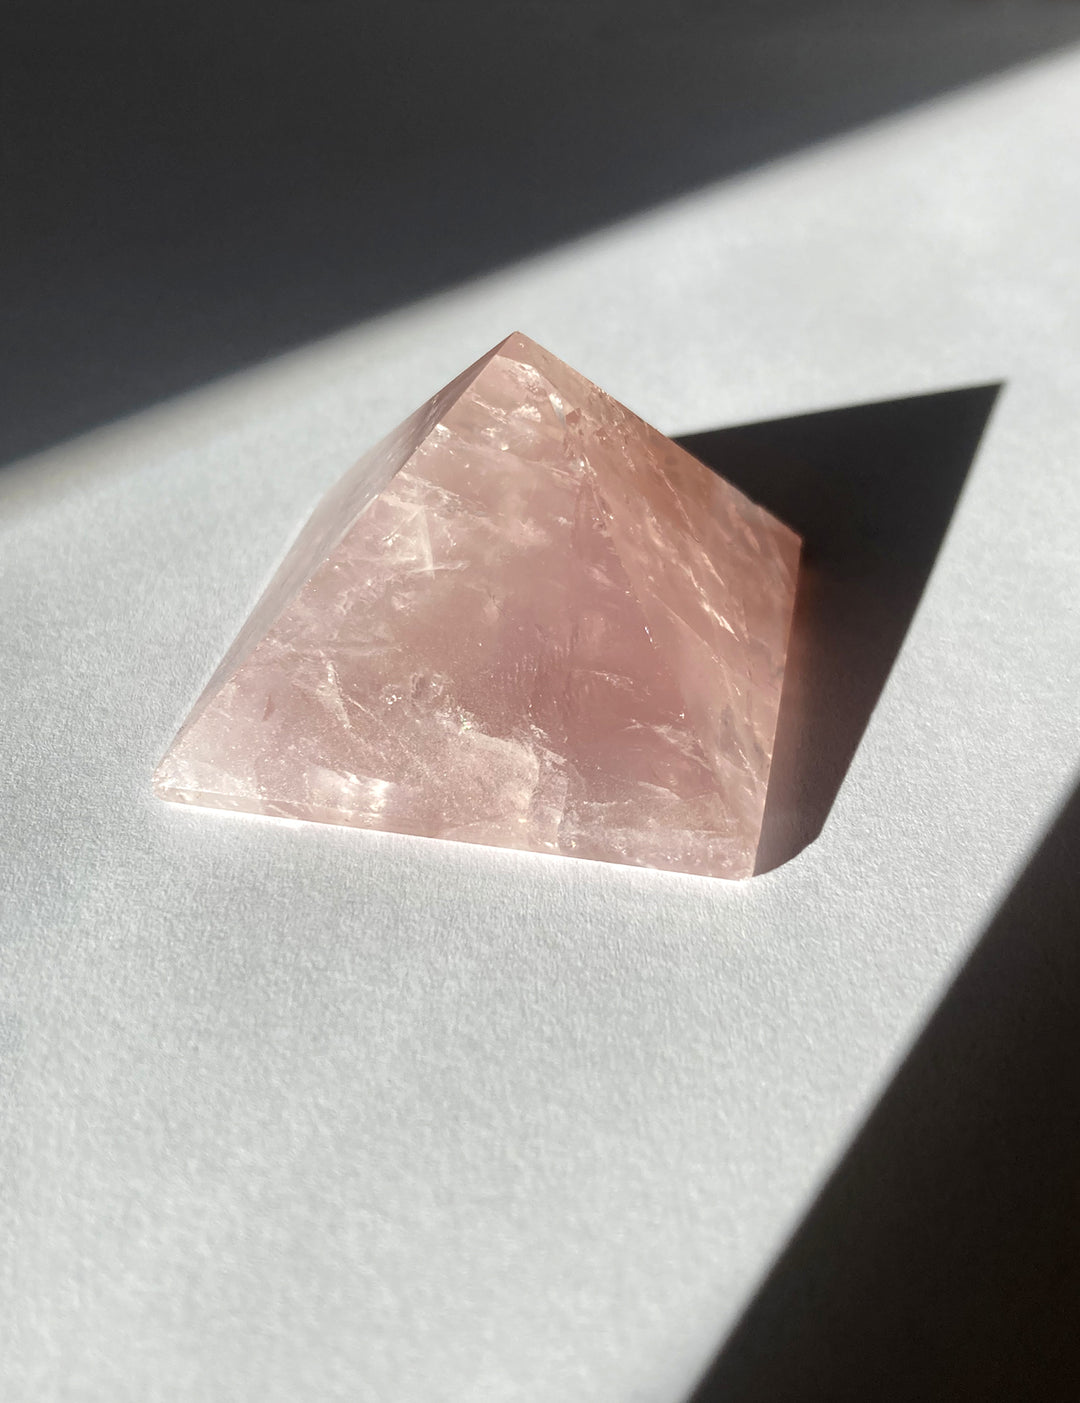 llayers pyramide pierre quartz rose lithothérapie méditation pink quartz stone pyramid